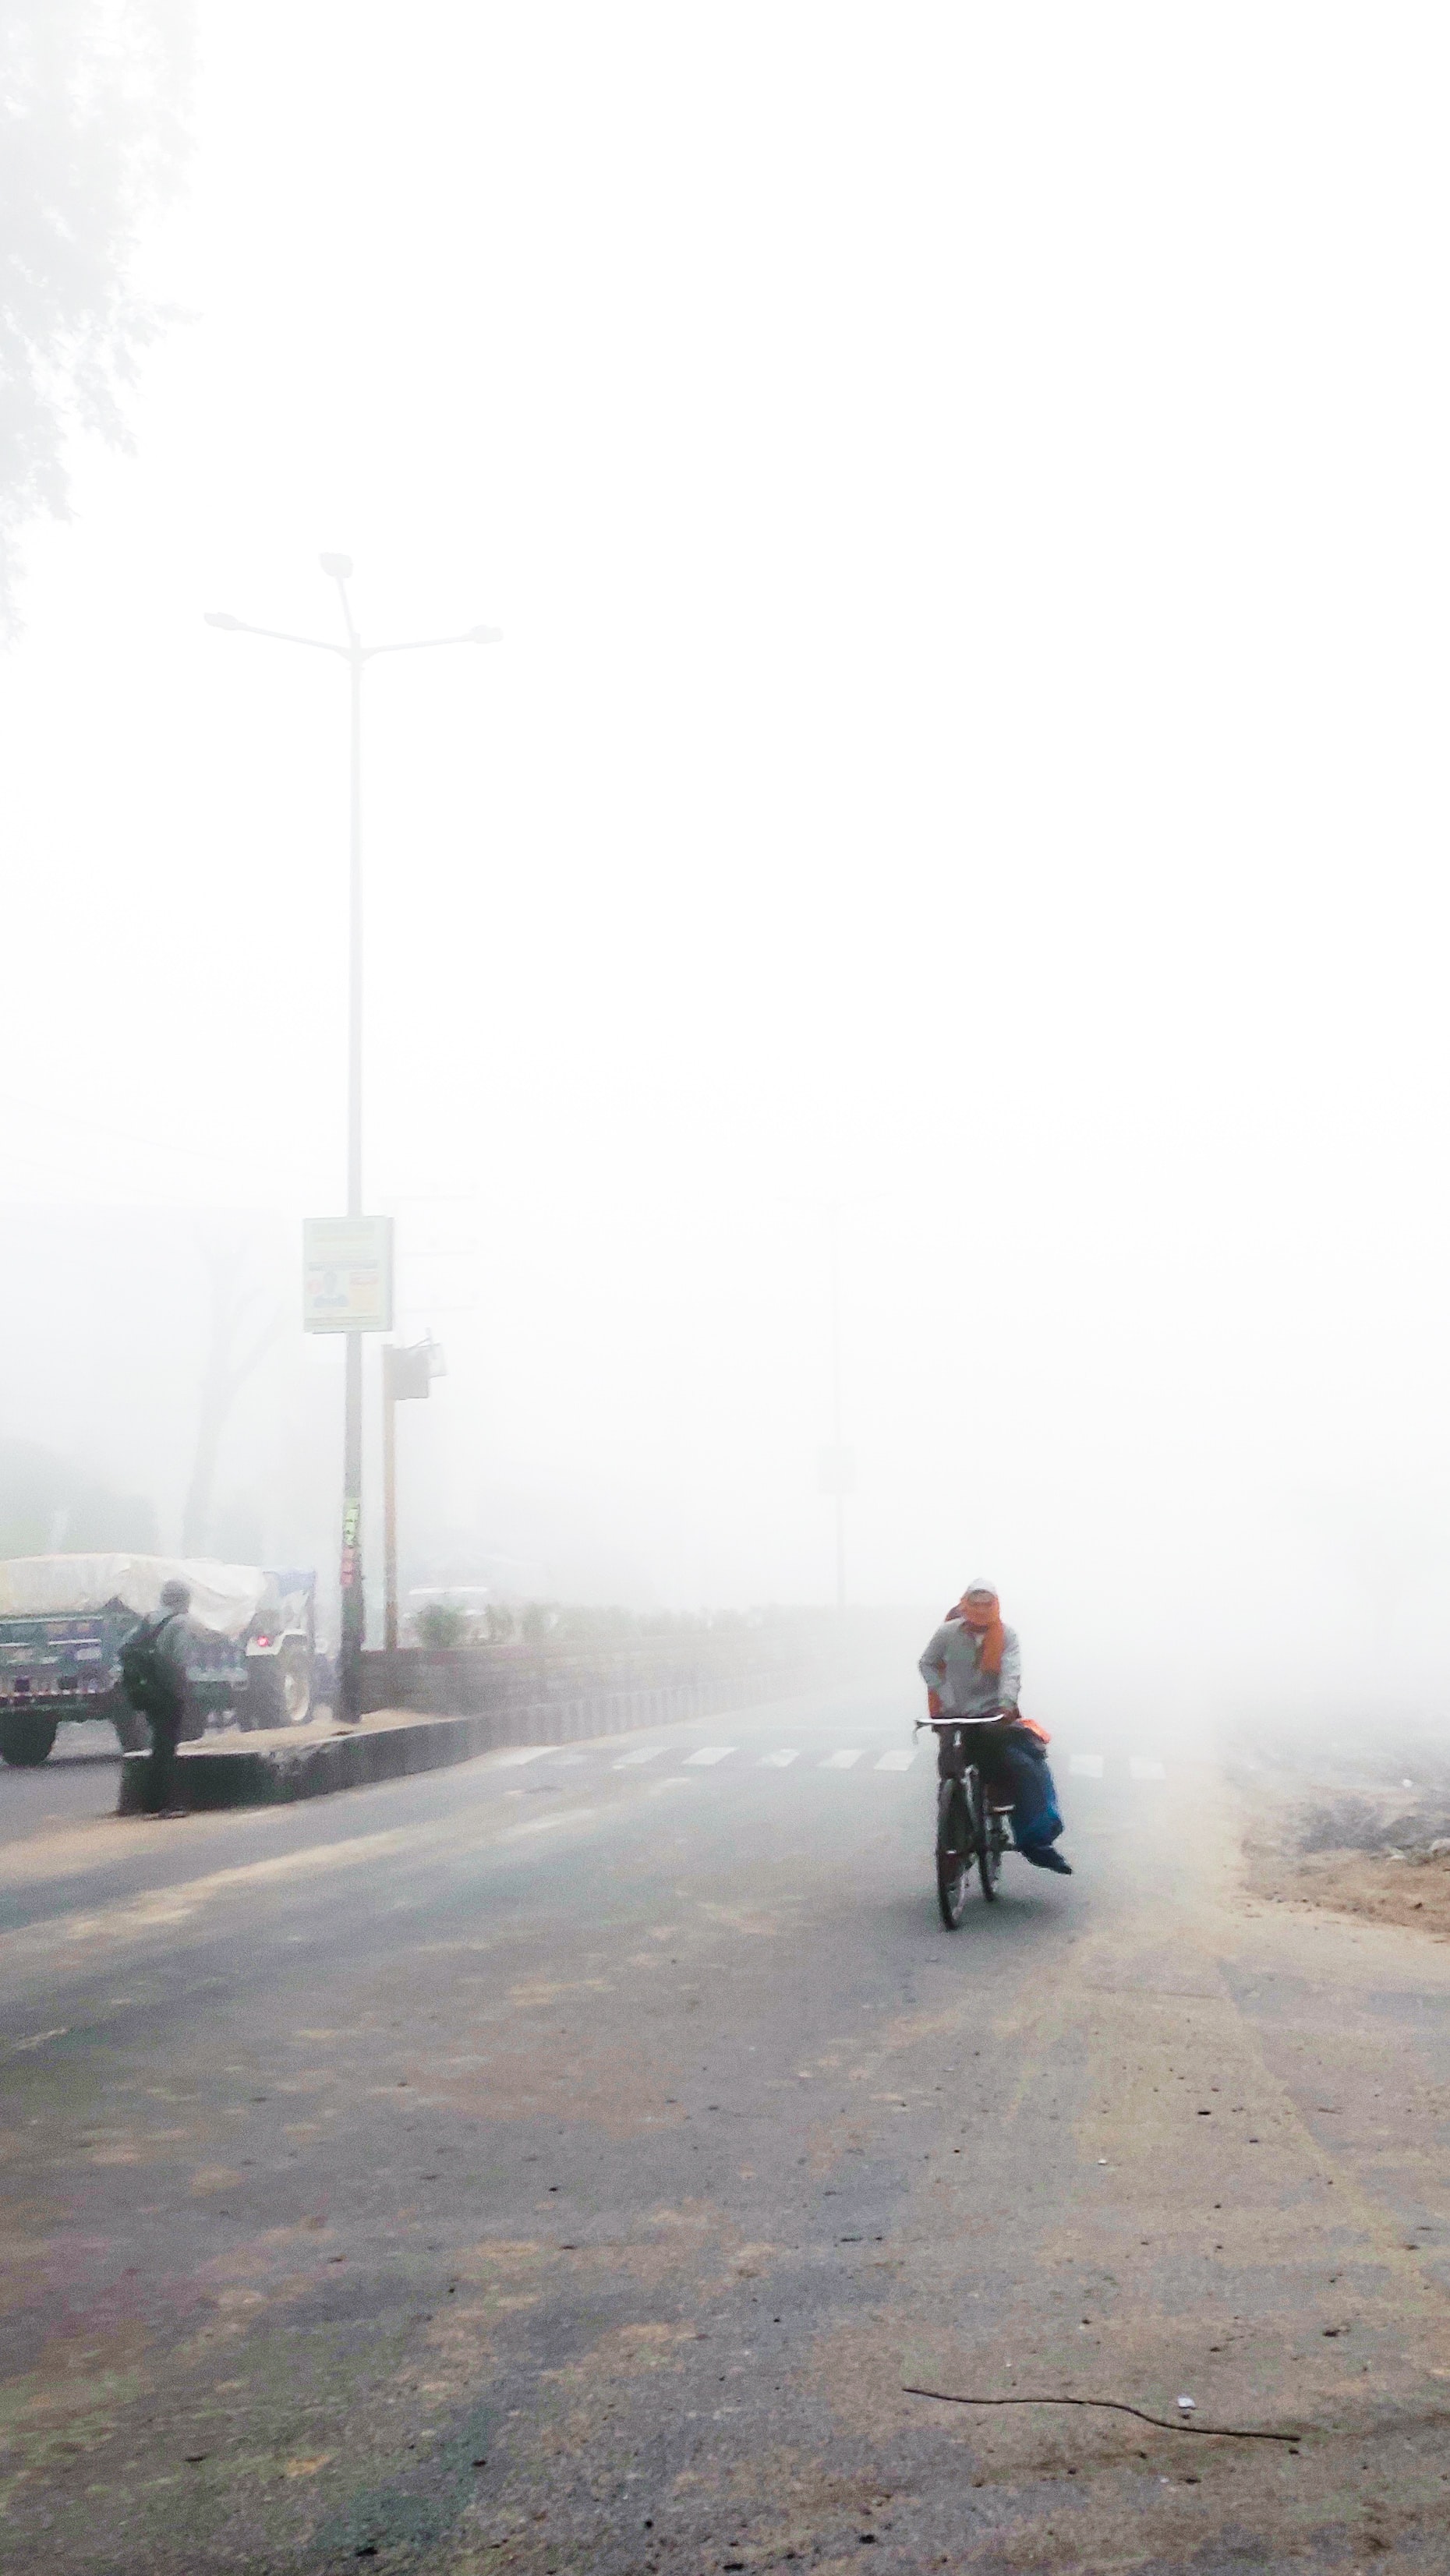 Covid-19: Delhi’s crisis exacerbated due to rising pollution